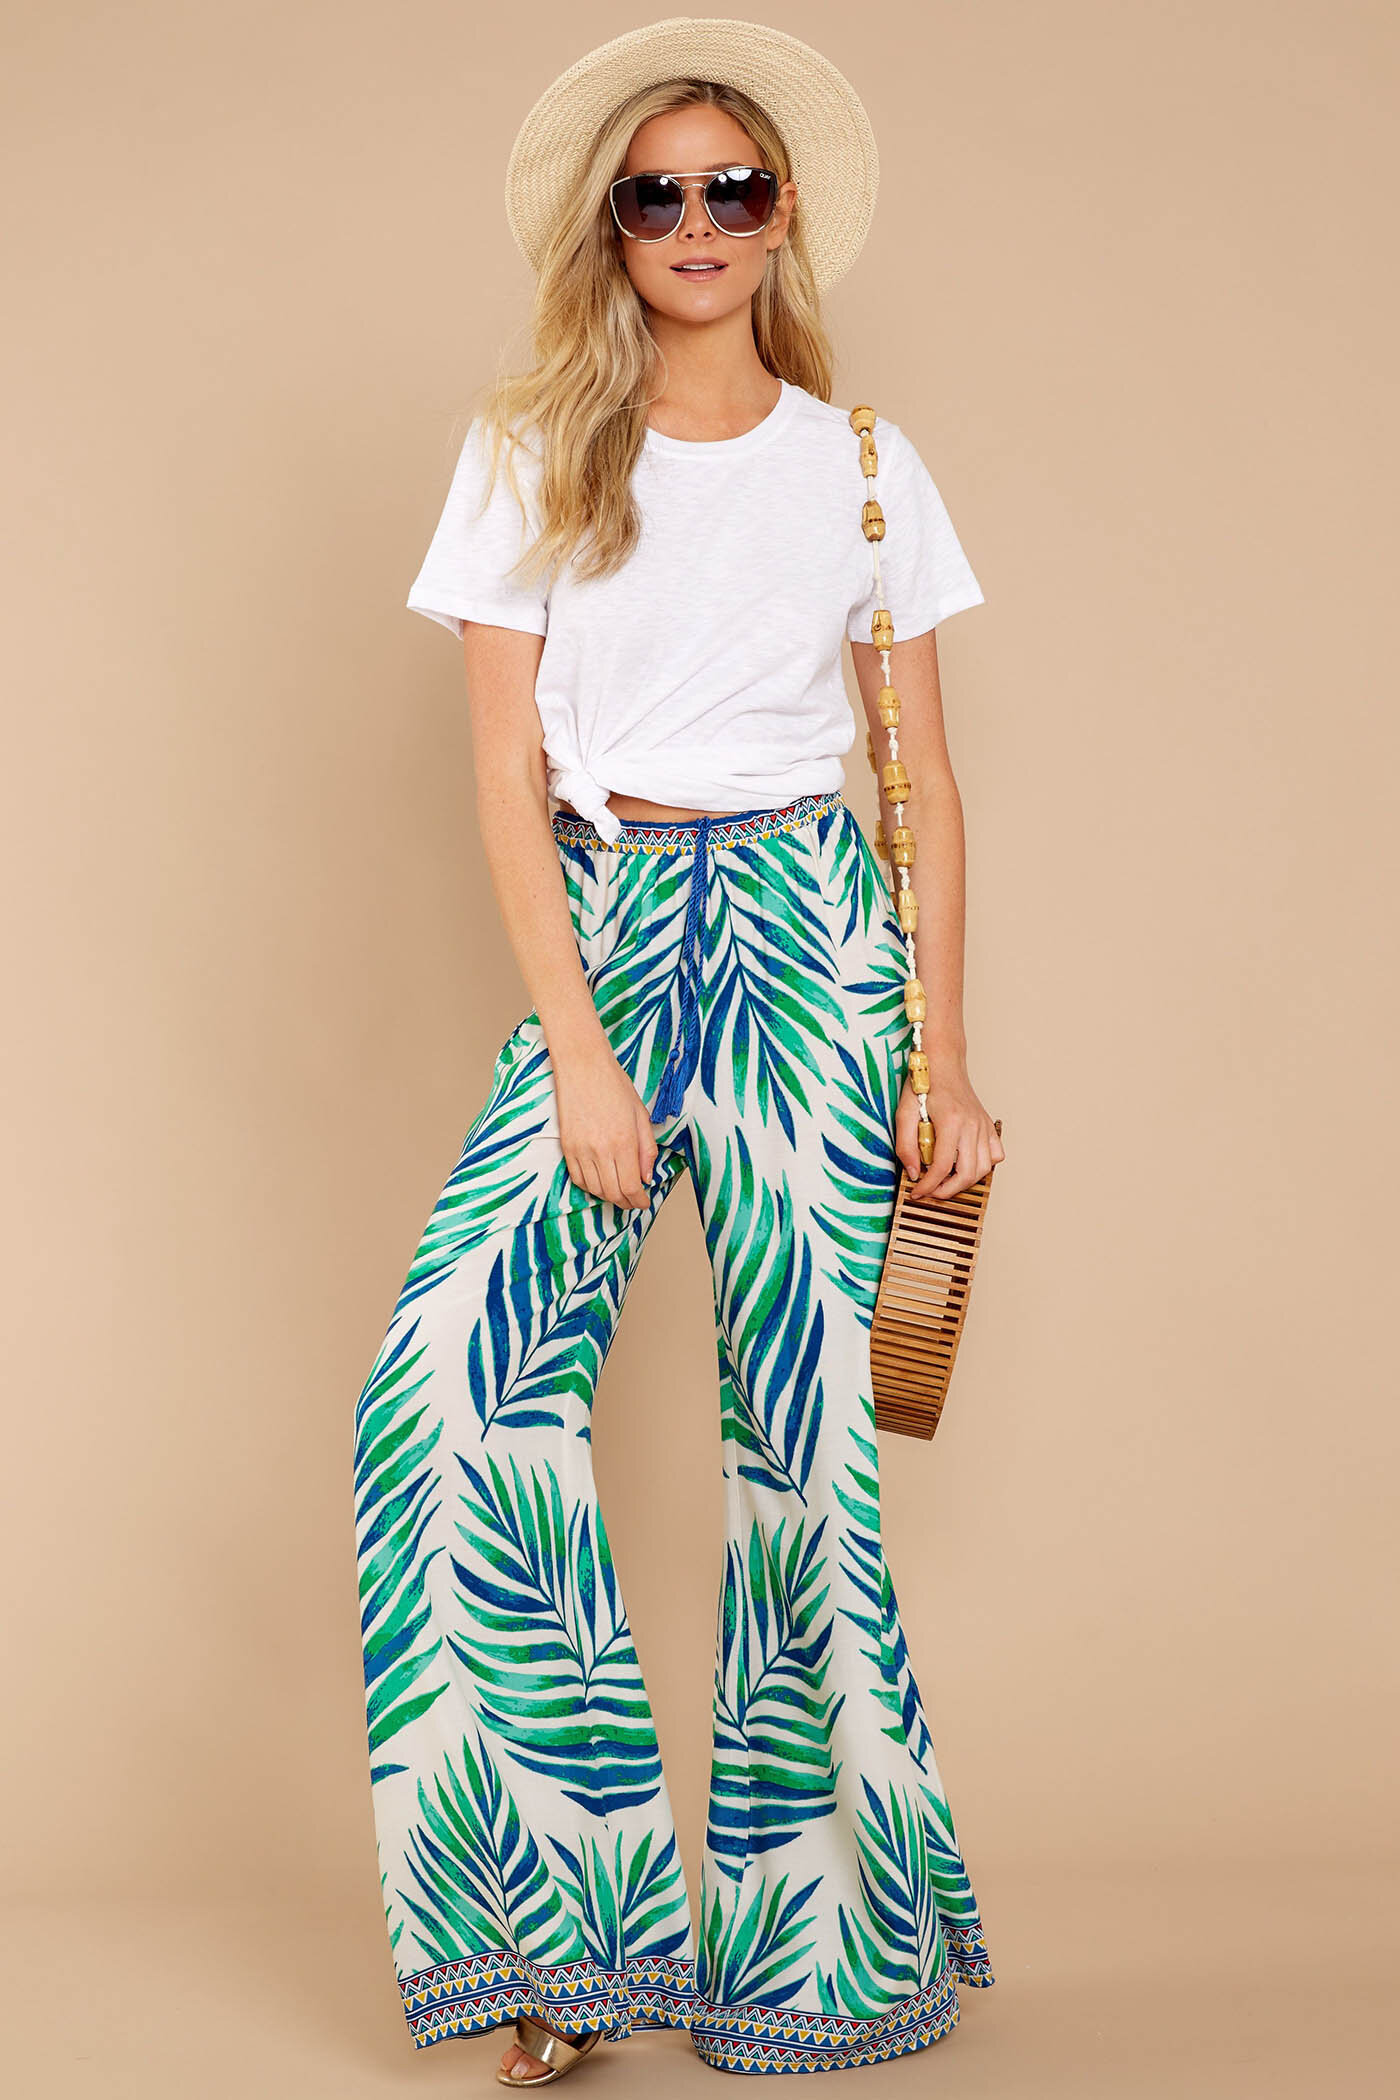 green-emerald-wideleg-pants-hawaiian-print-white-tee-tan-bag-hat-straw-sun-blonde-spring-summer-weekend.jpg